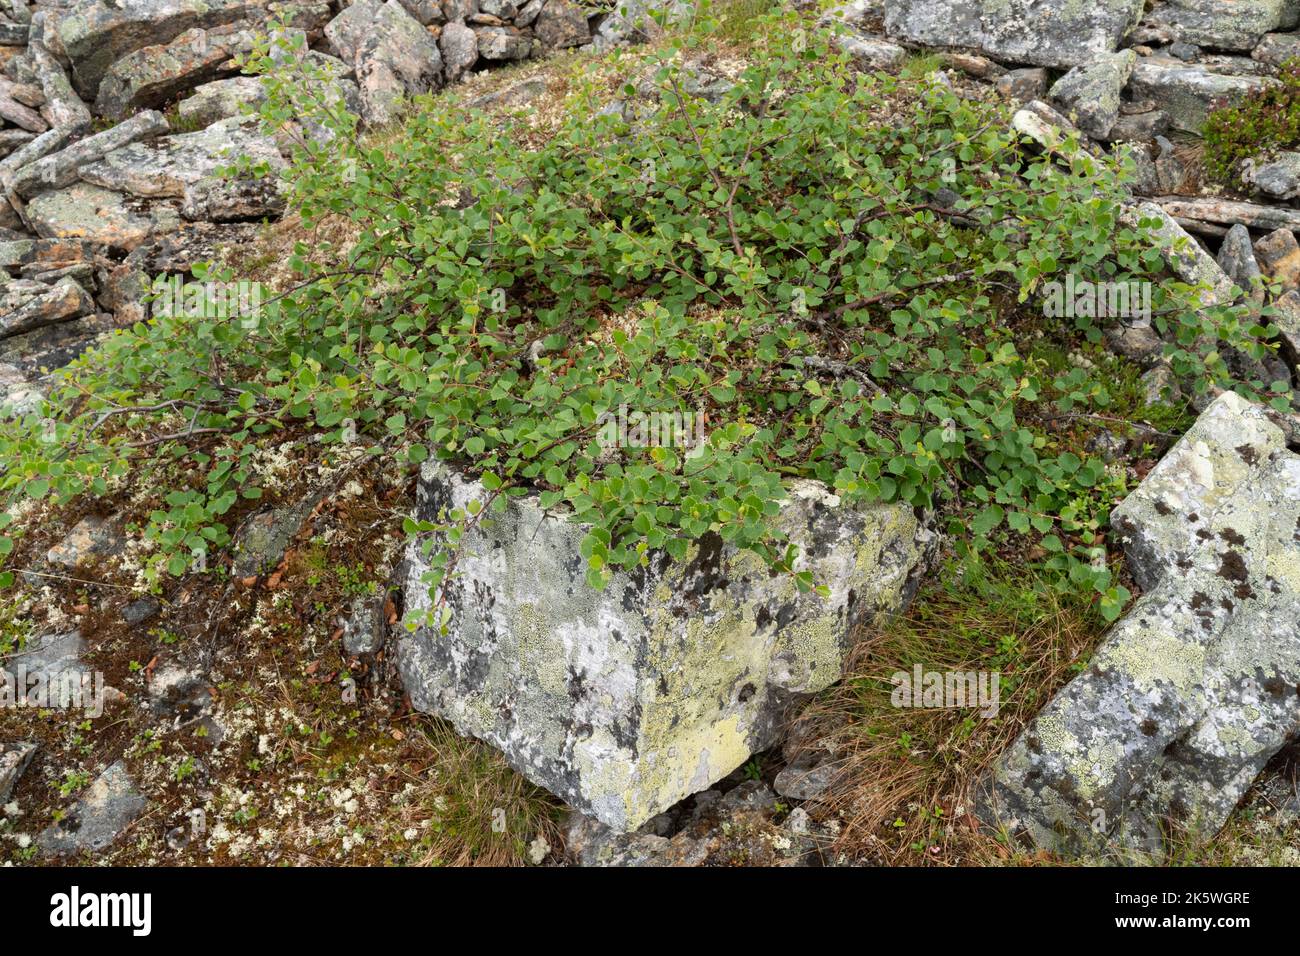 A low-growing form of a fell birch called the Kiilopää birch (Betula pubescens ssp. czerepanovii var. appressa) growing on a rock in Finland Stock Photo